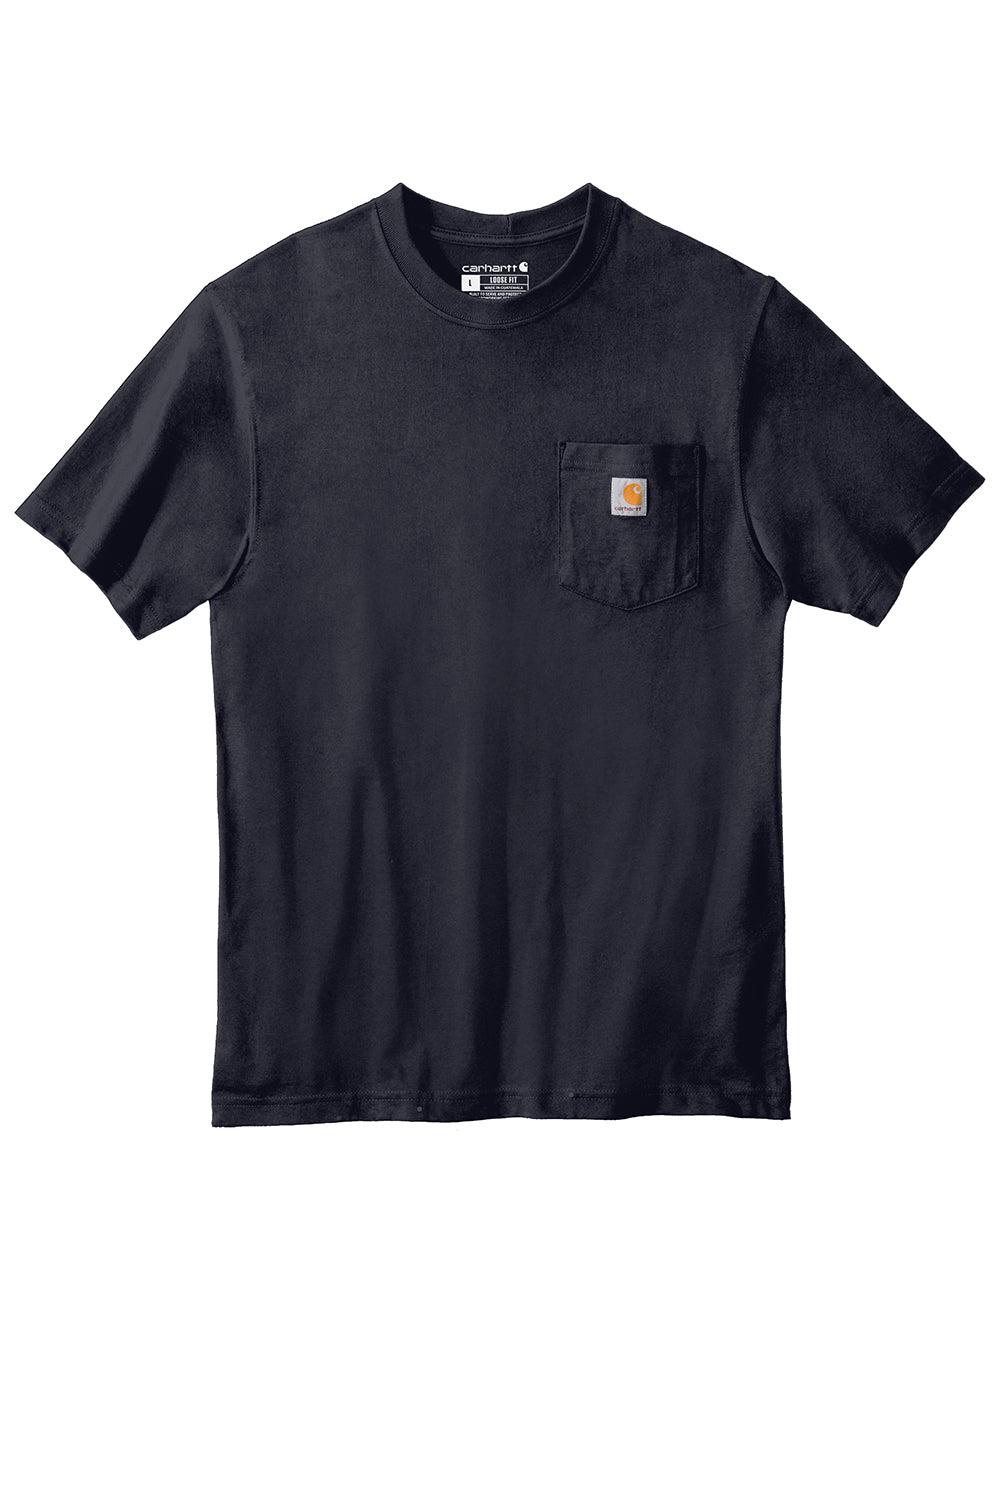 Carhartt CTK87/CTTK87 Mens Workwear Short Sleeve Crewneck T-Shirt w/ Pocket Navy Blue Flat Front